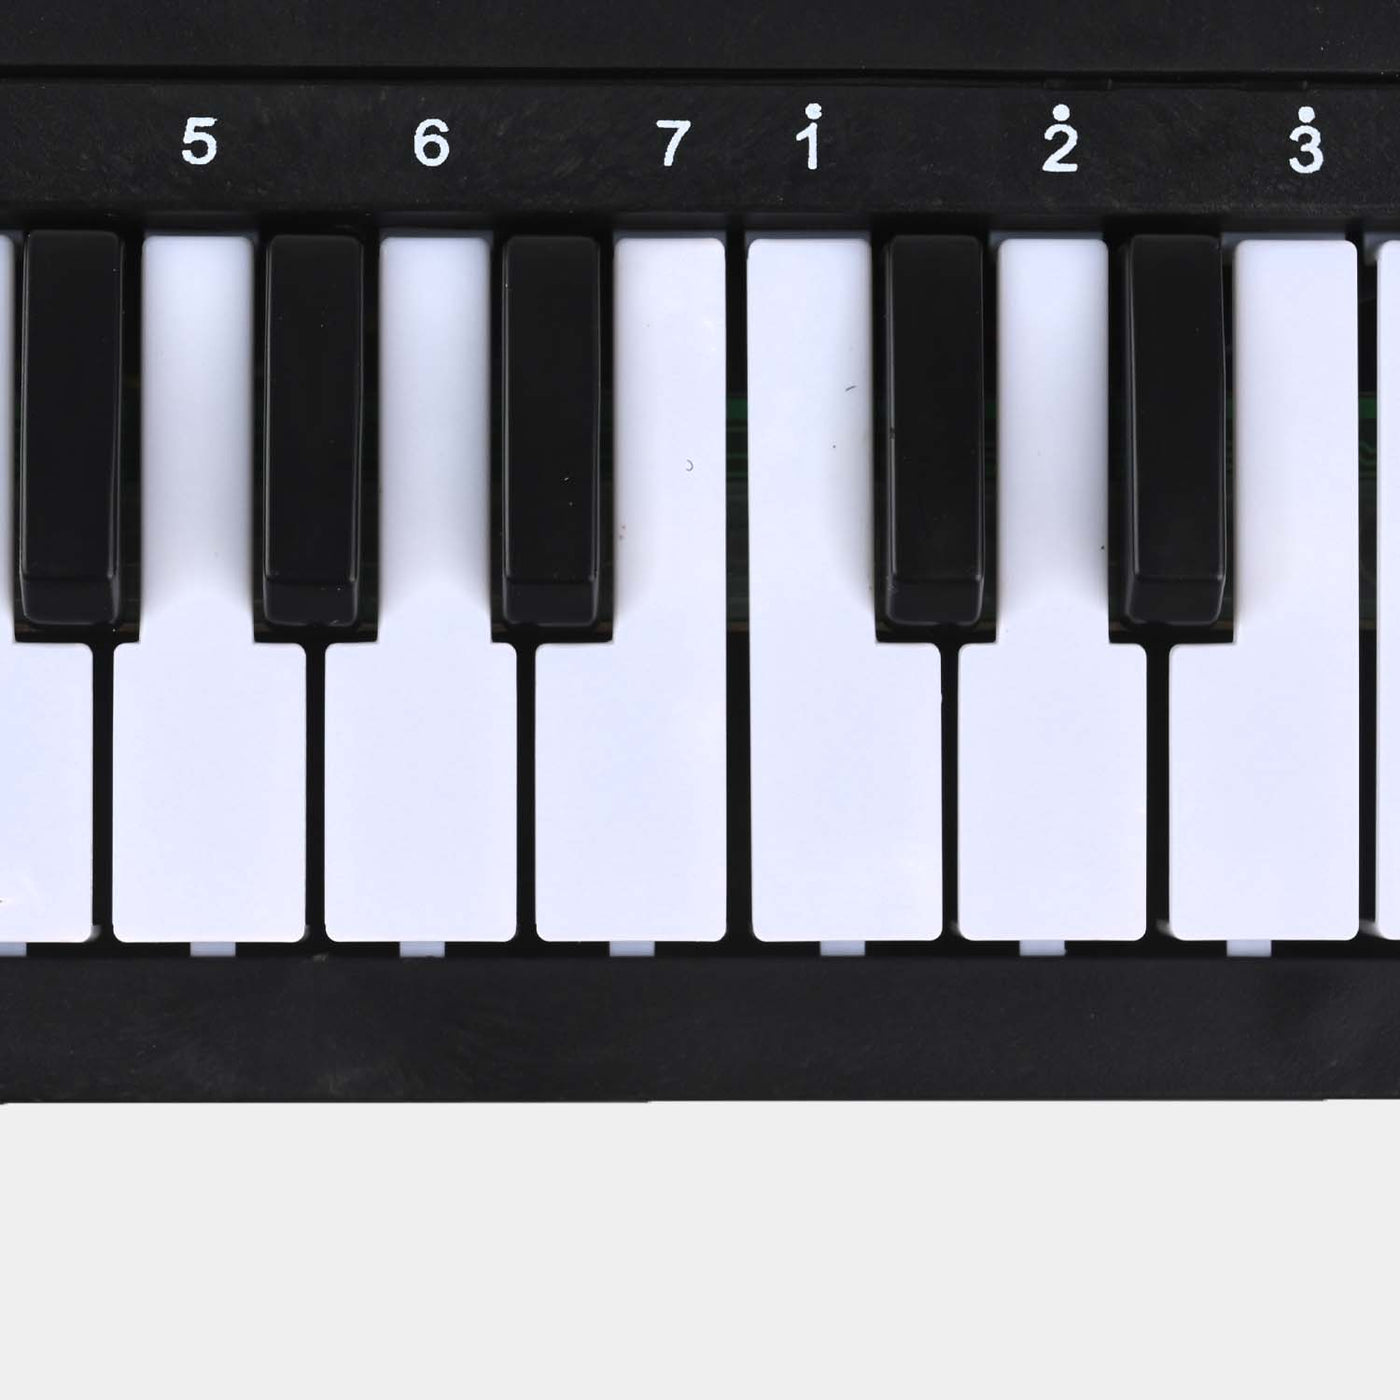 Electronic Keyboard Piano For Kids